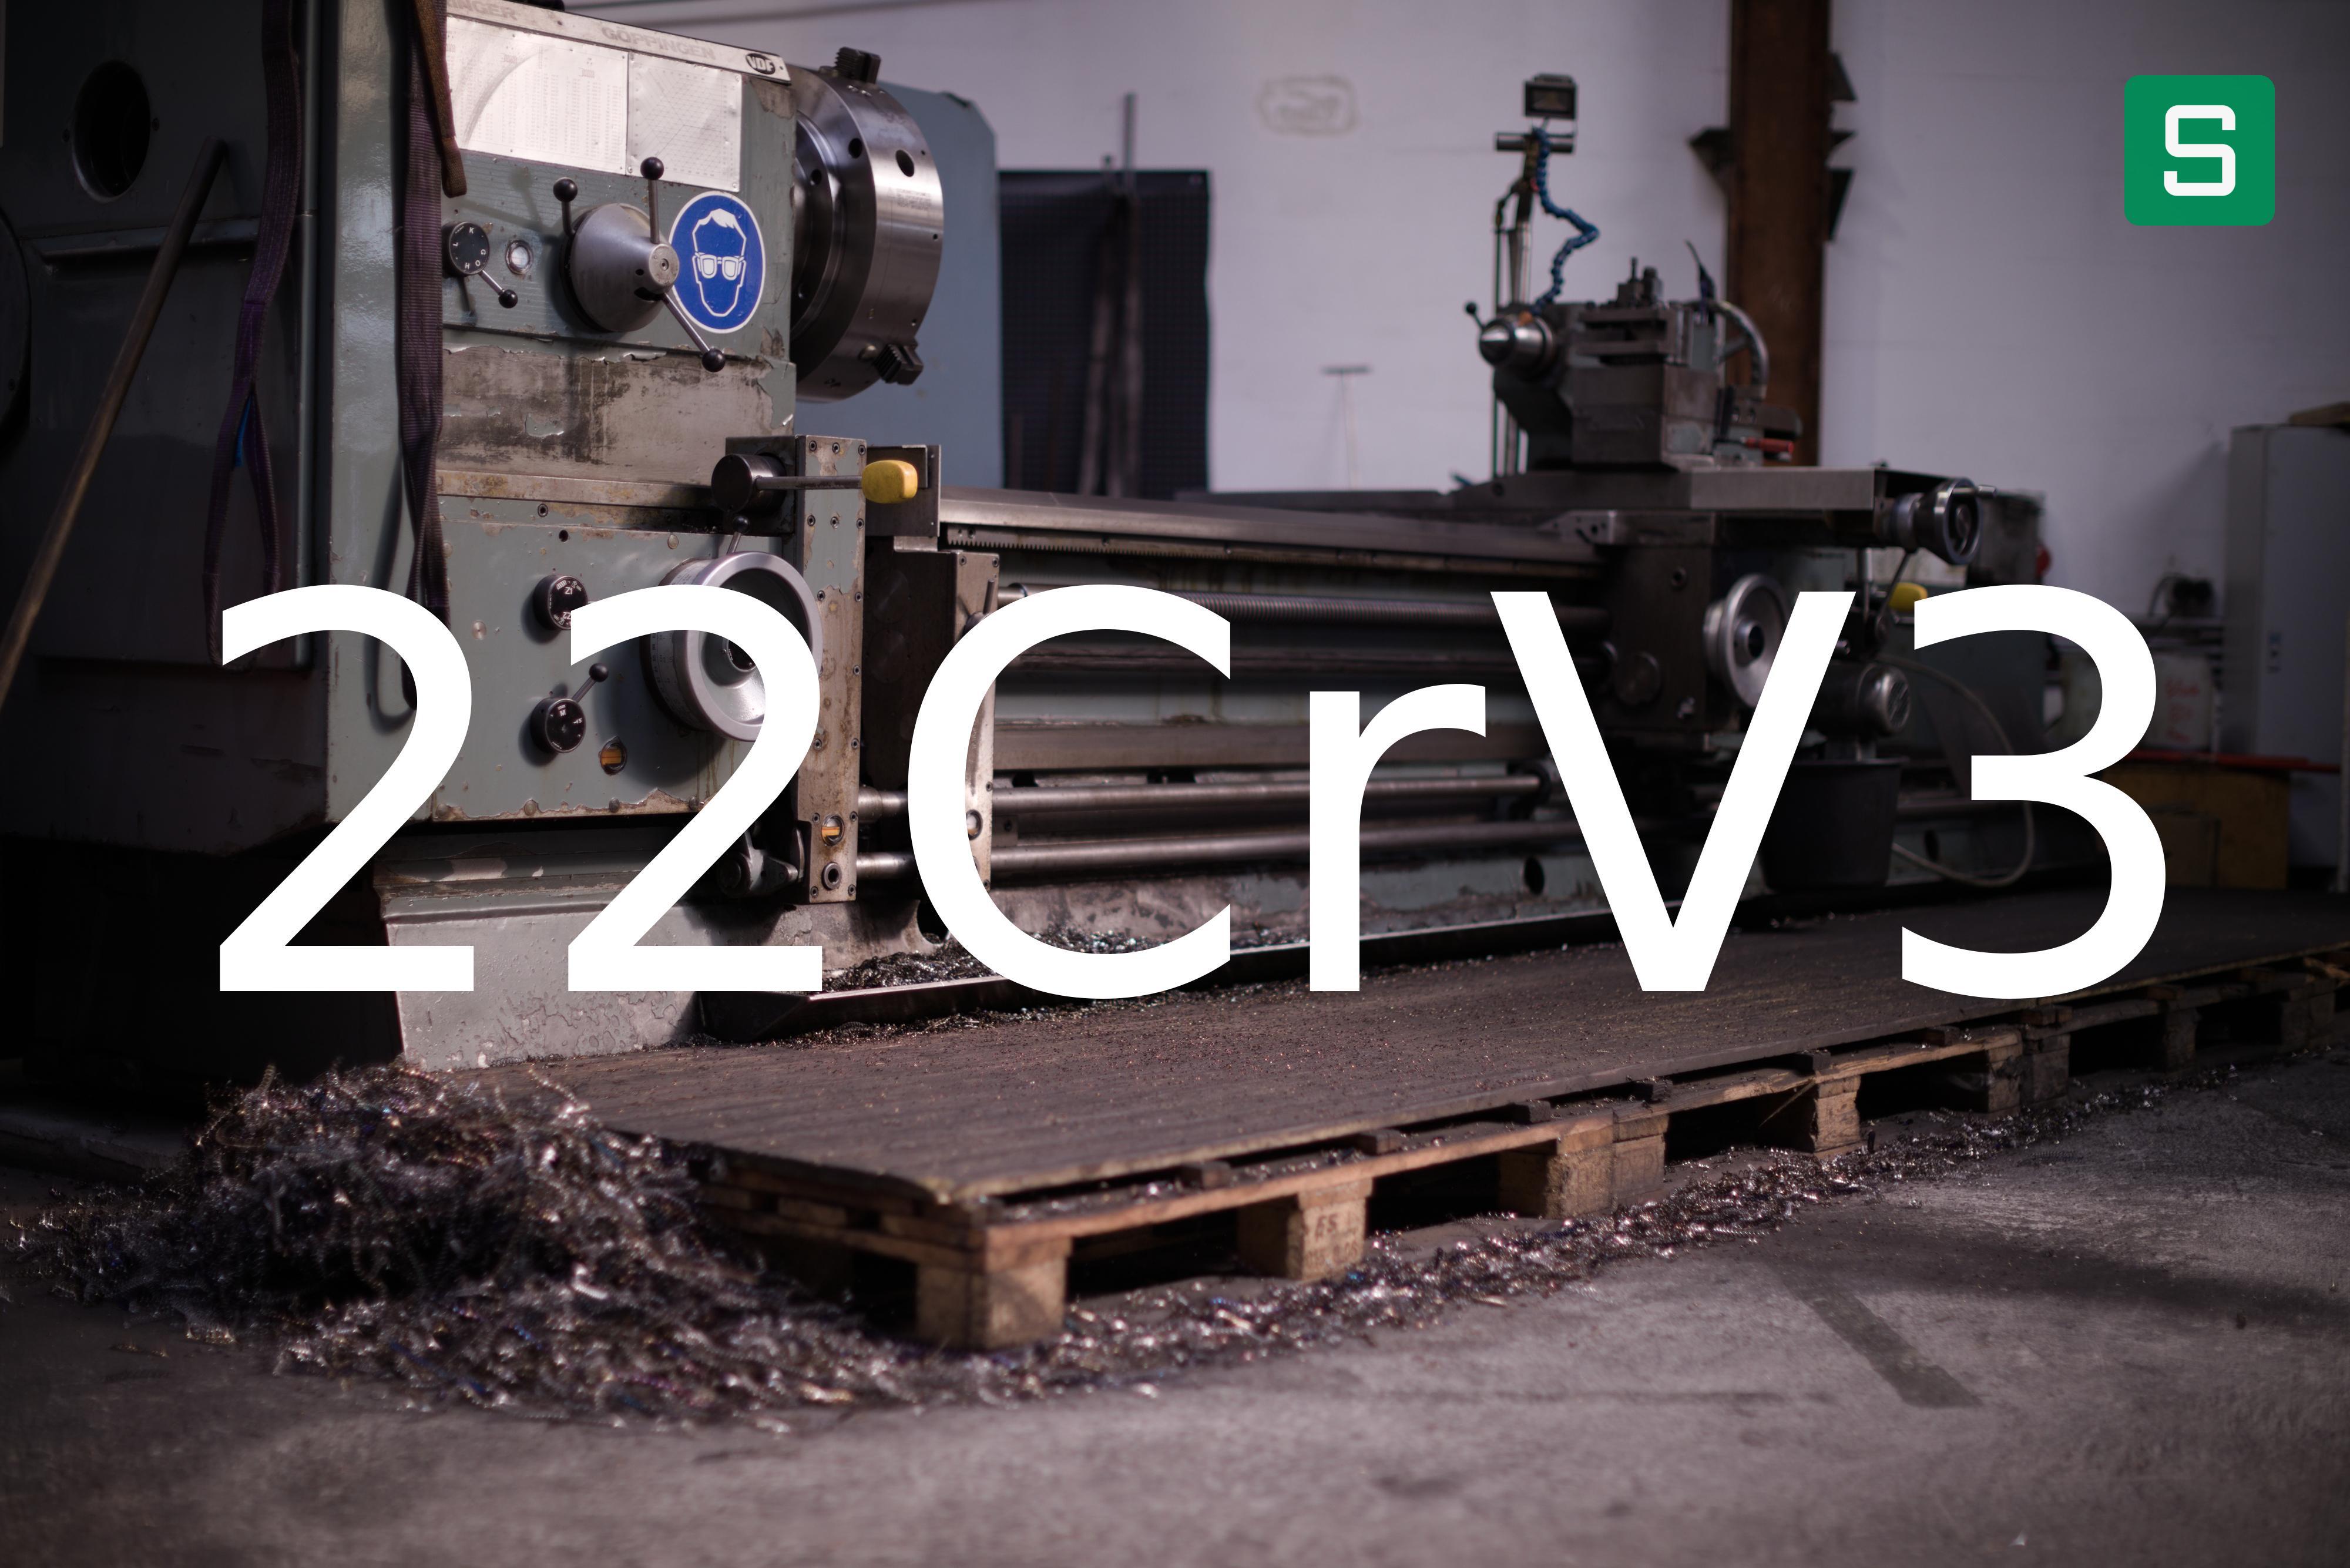 Steel Material: 22CrV3